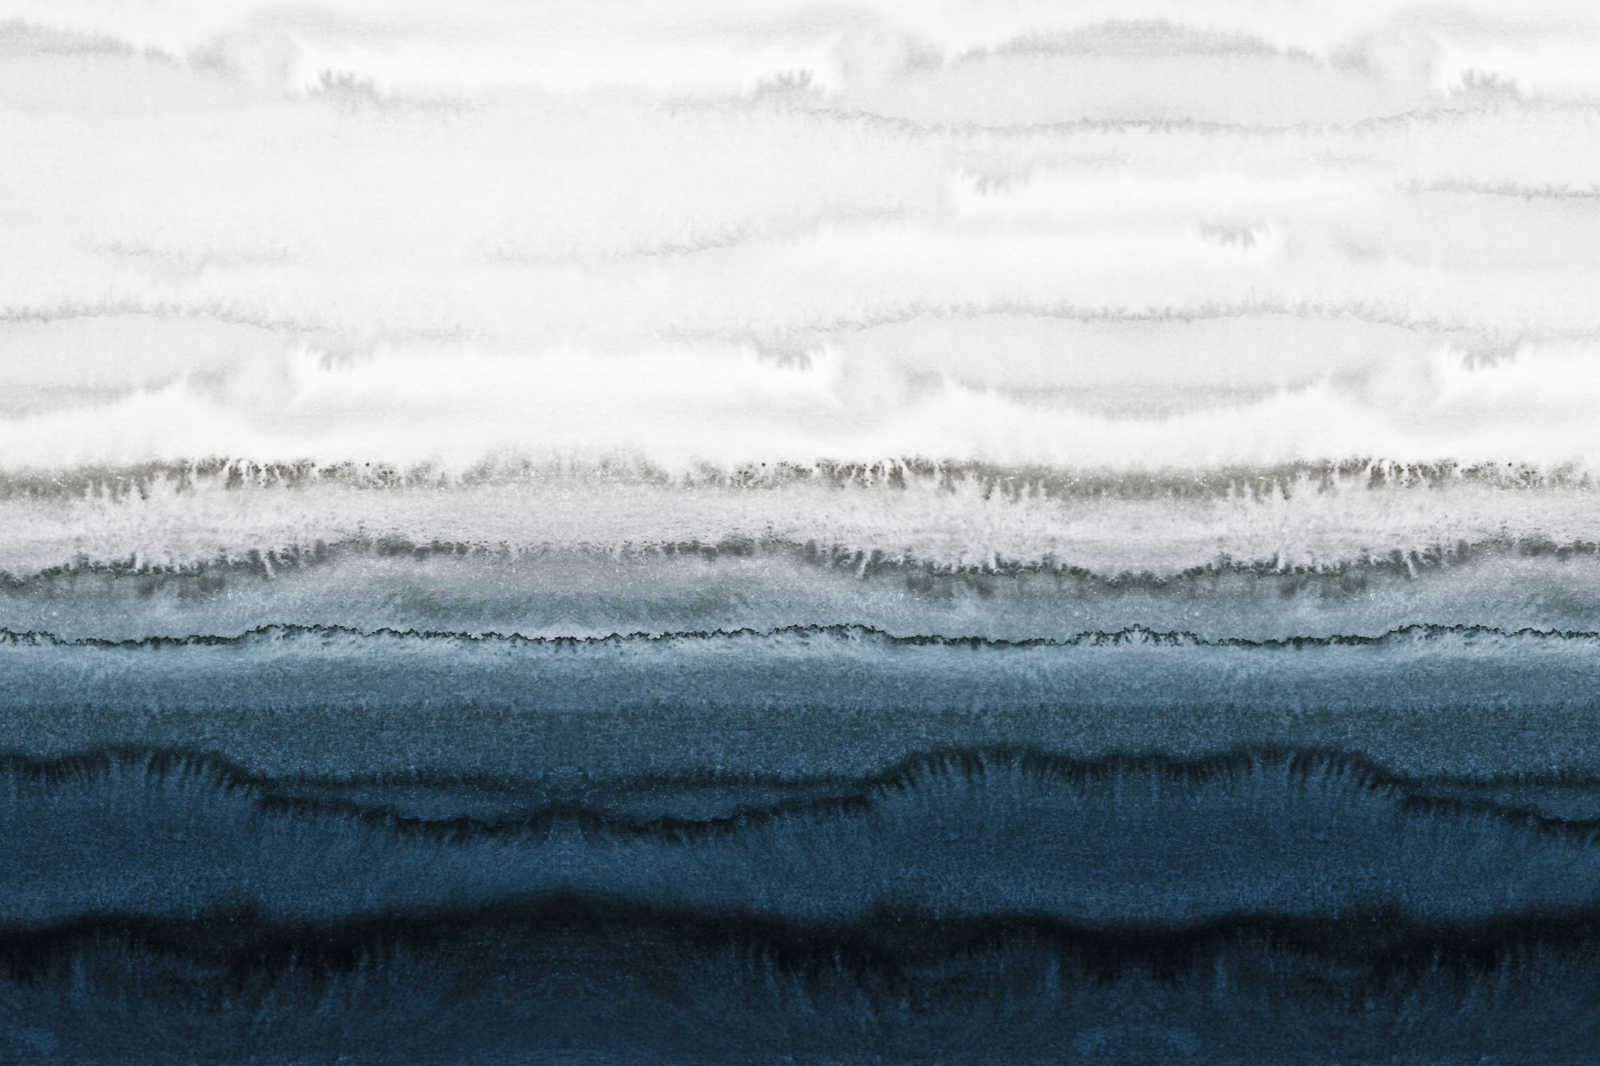             Quadro su tela Maree in stile acquerello minimalista - 0,90 m x 0,60 m
        